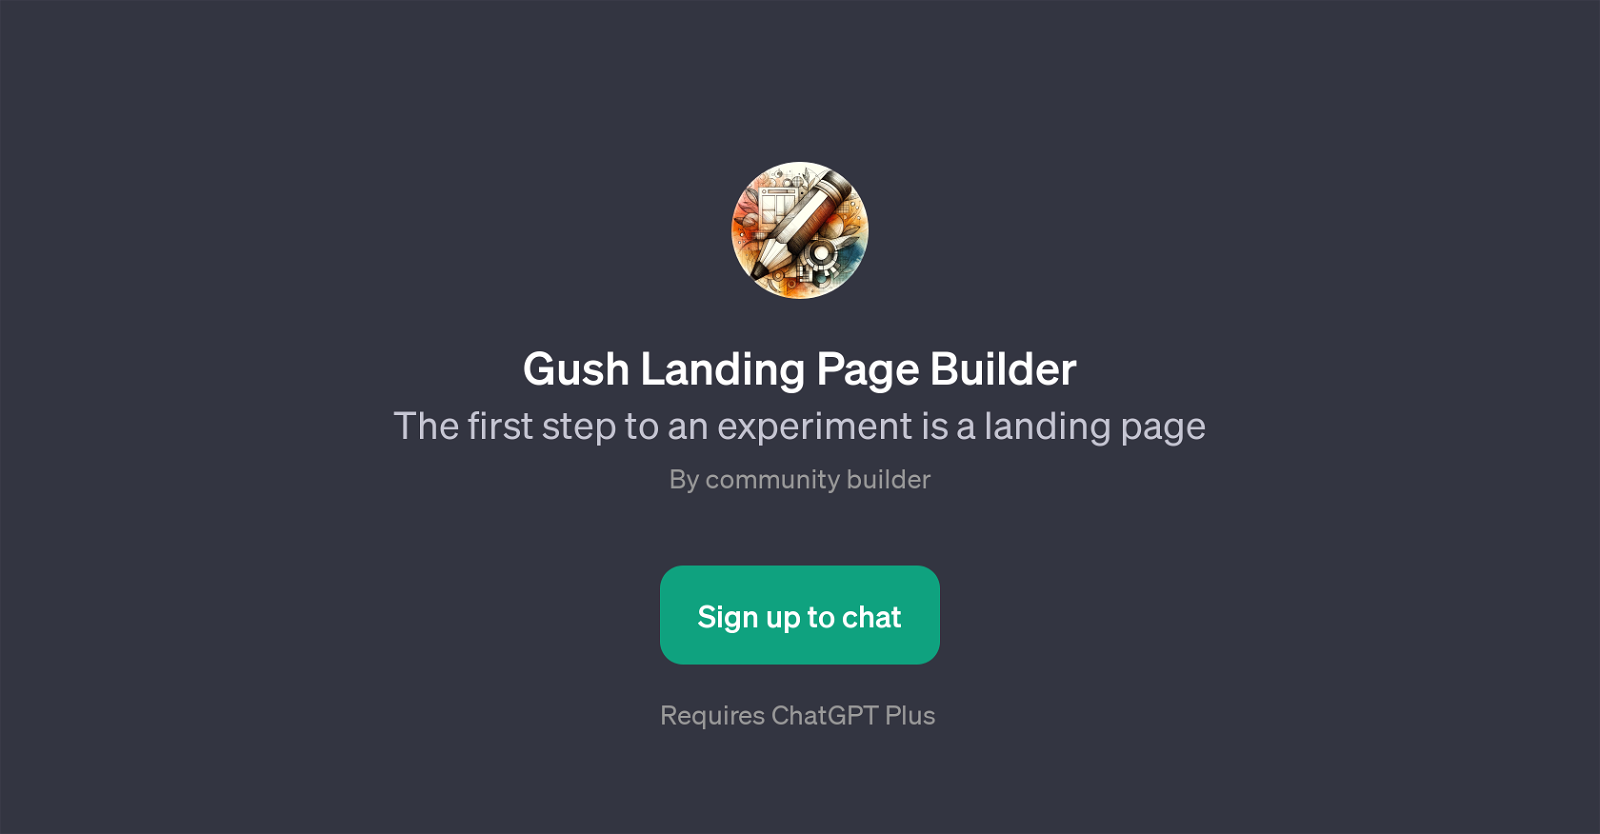 Gush Landing Page Builder website